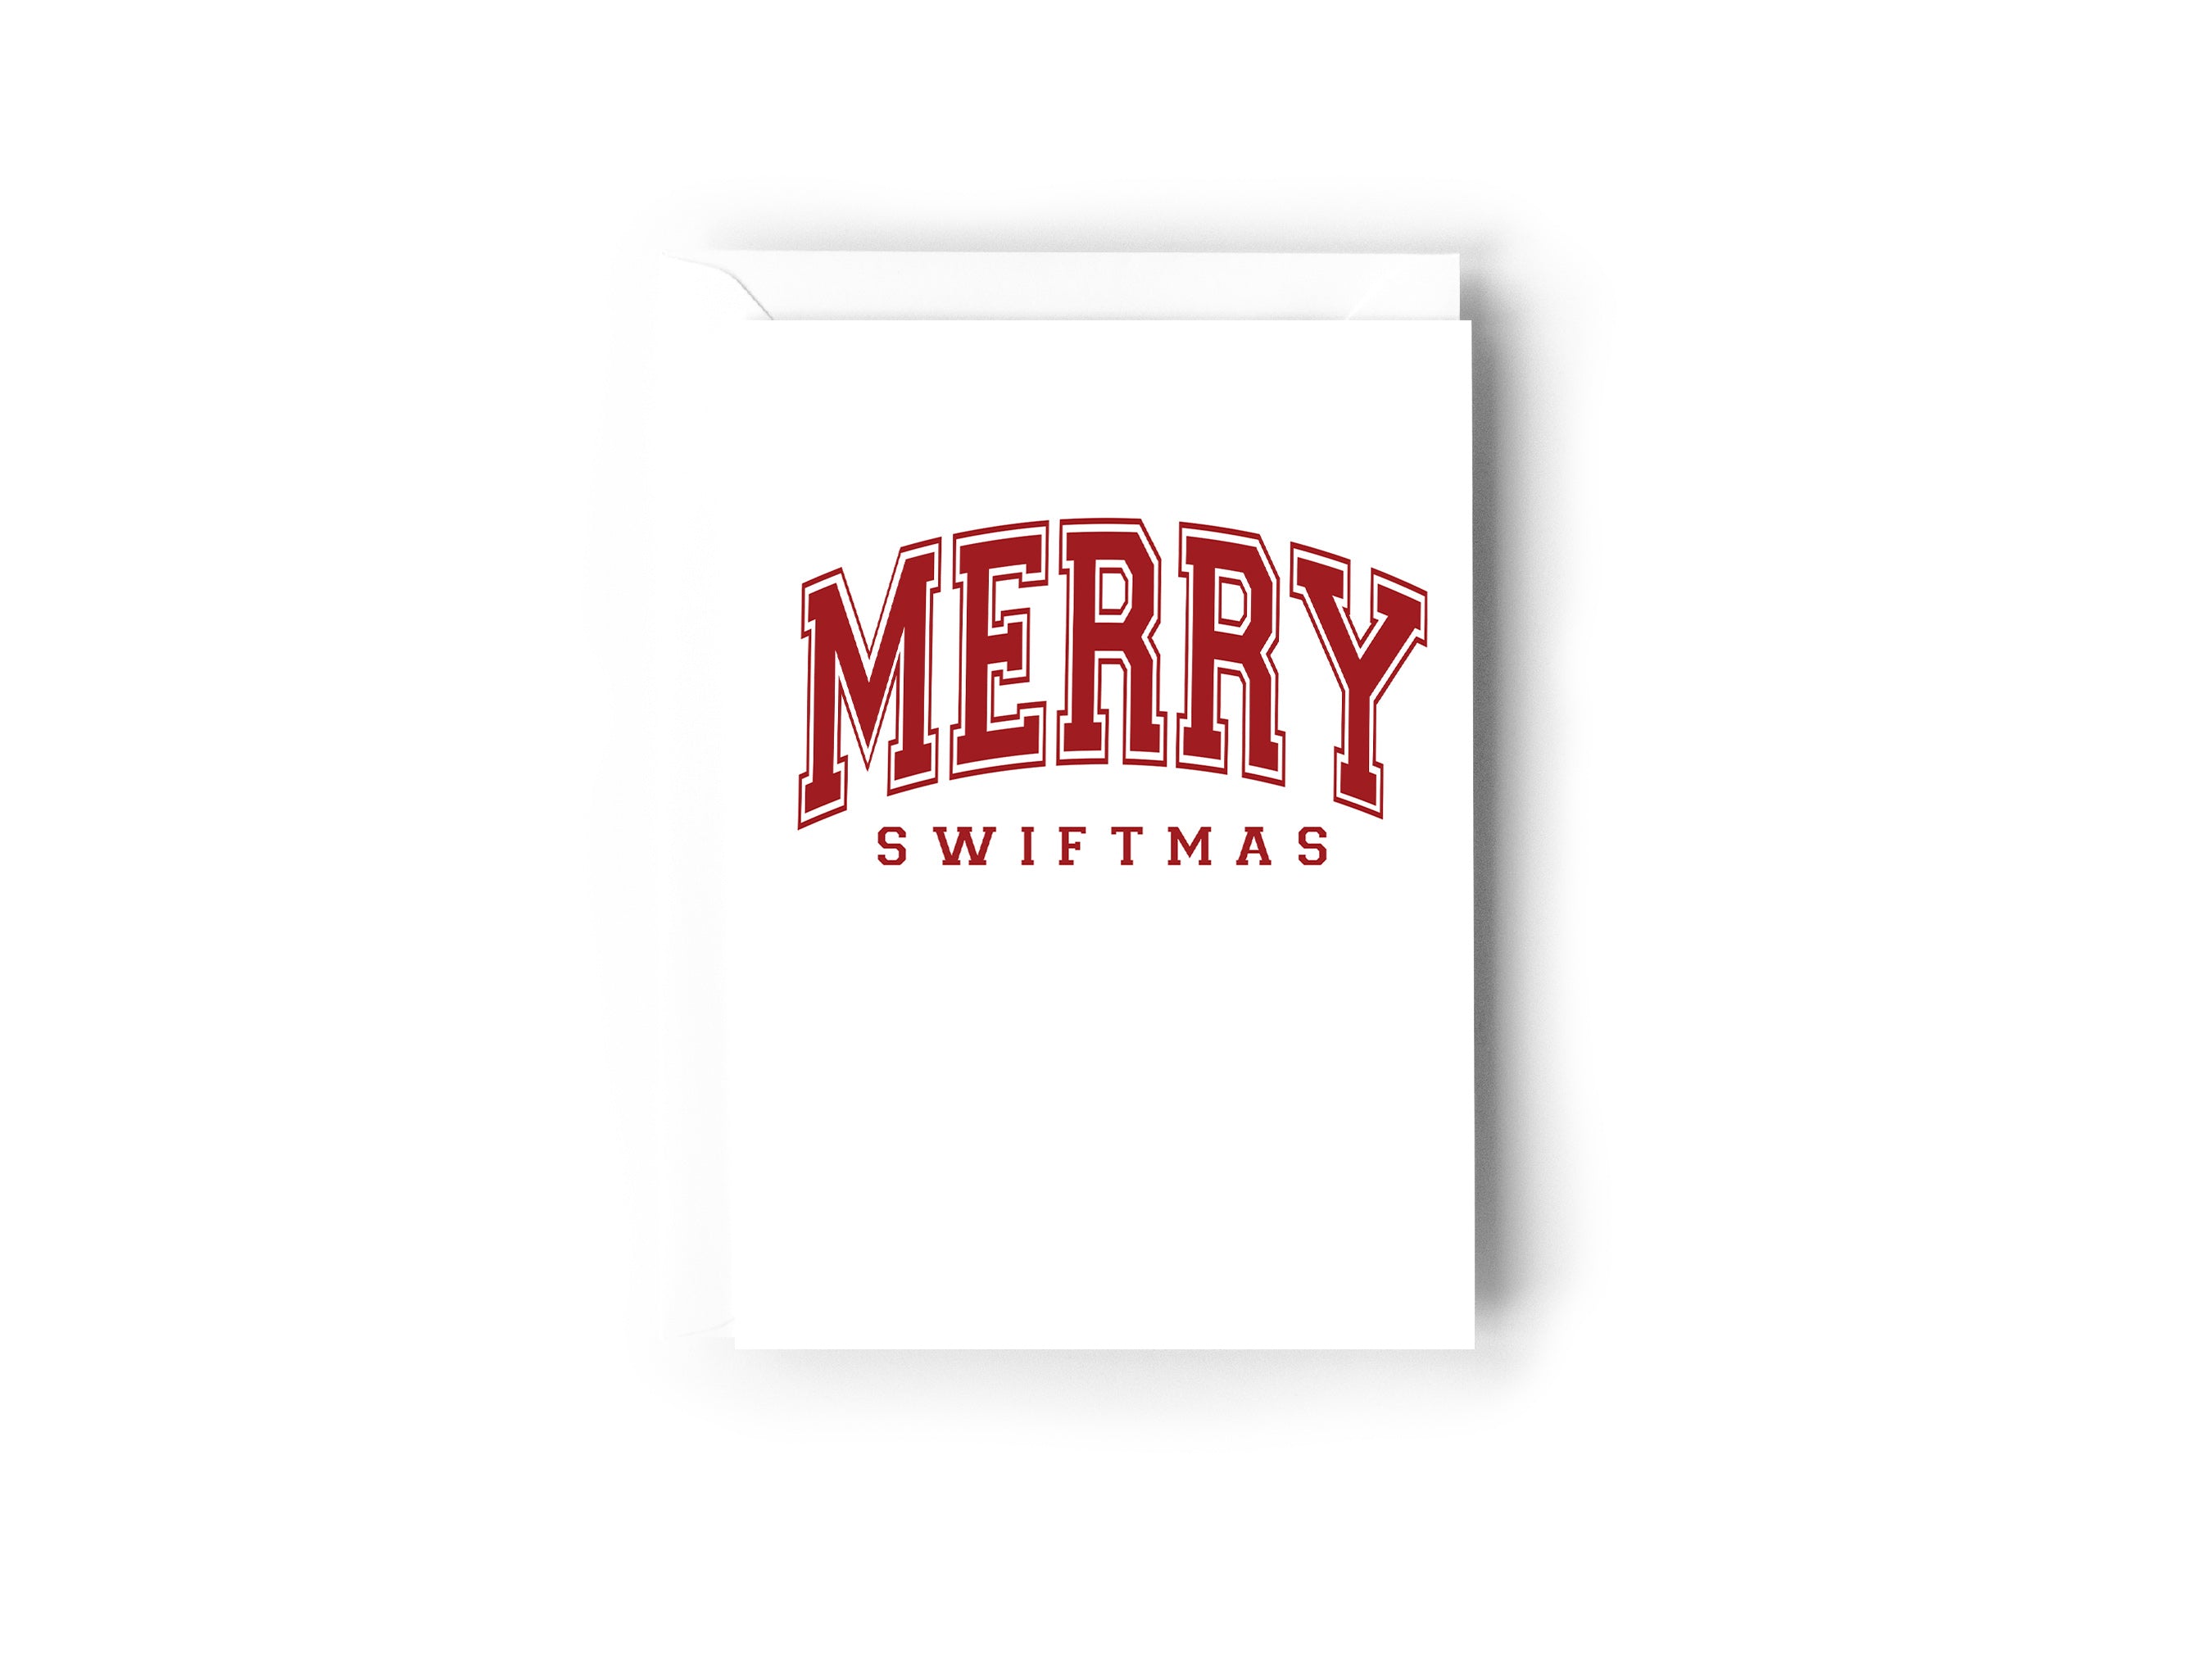 Merry Swiftmas